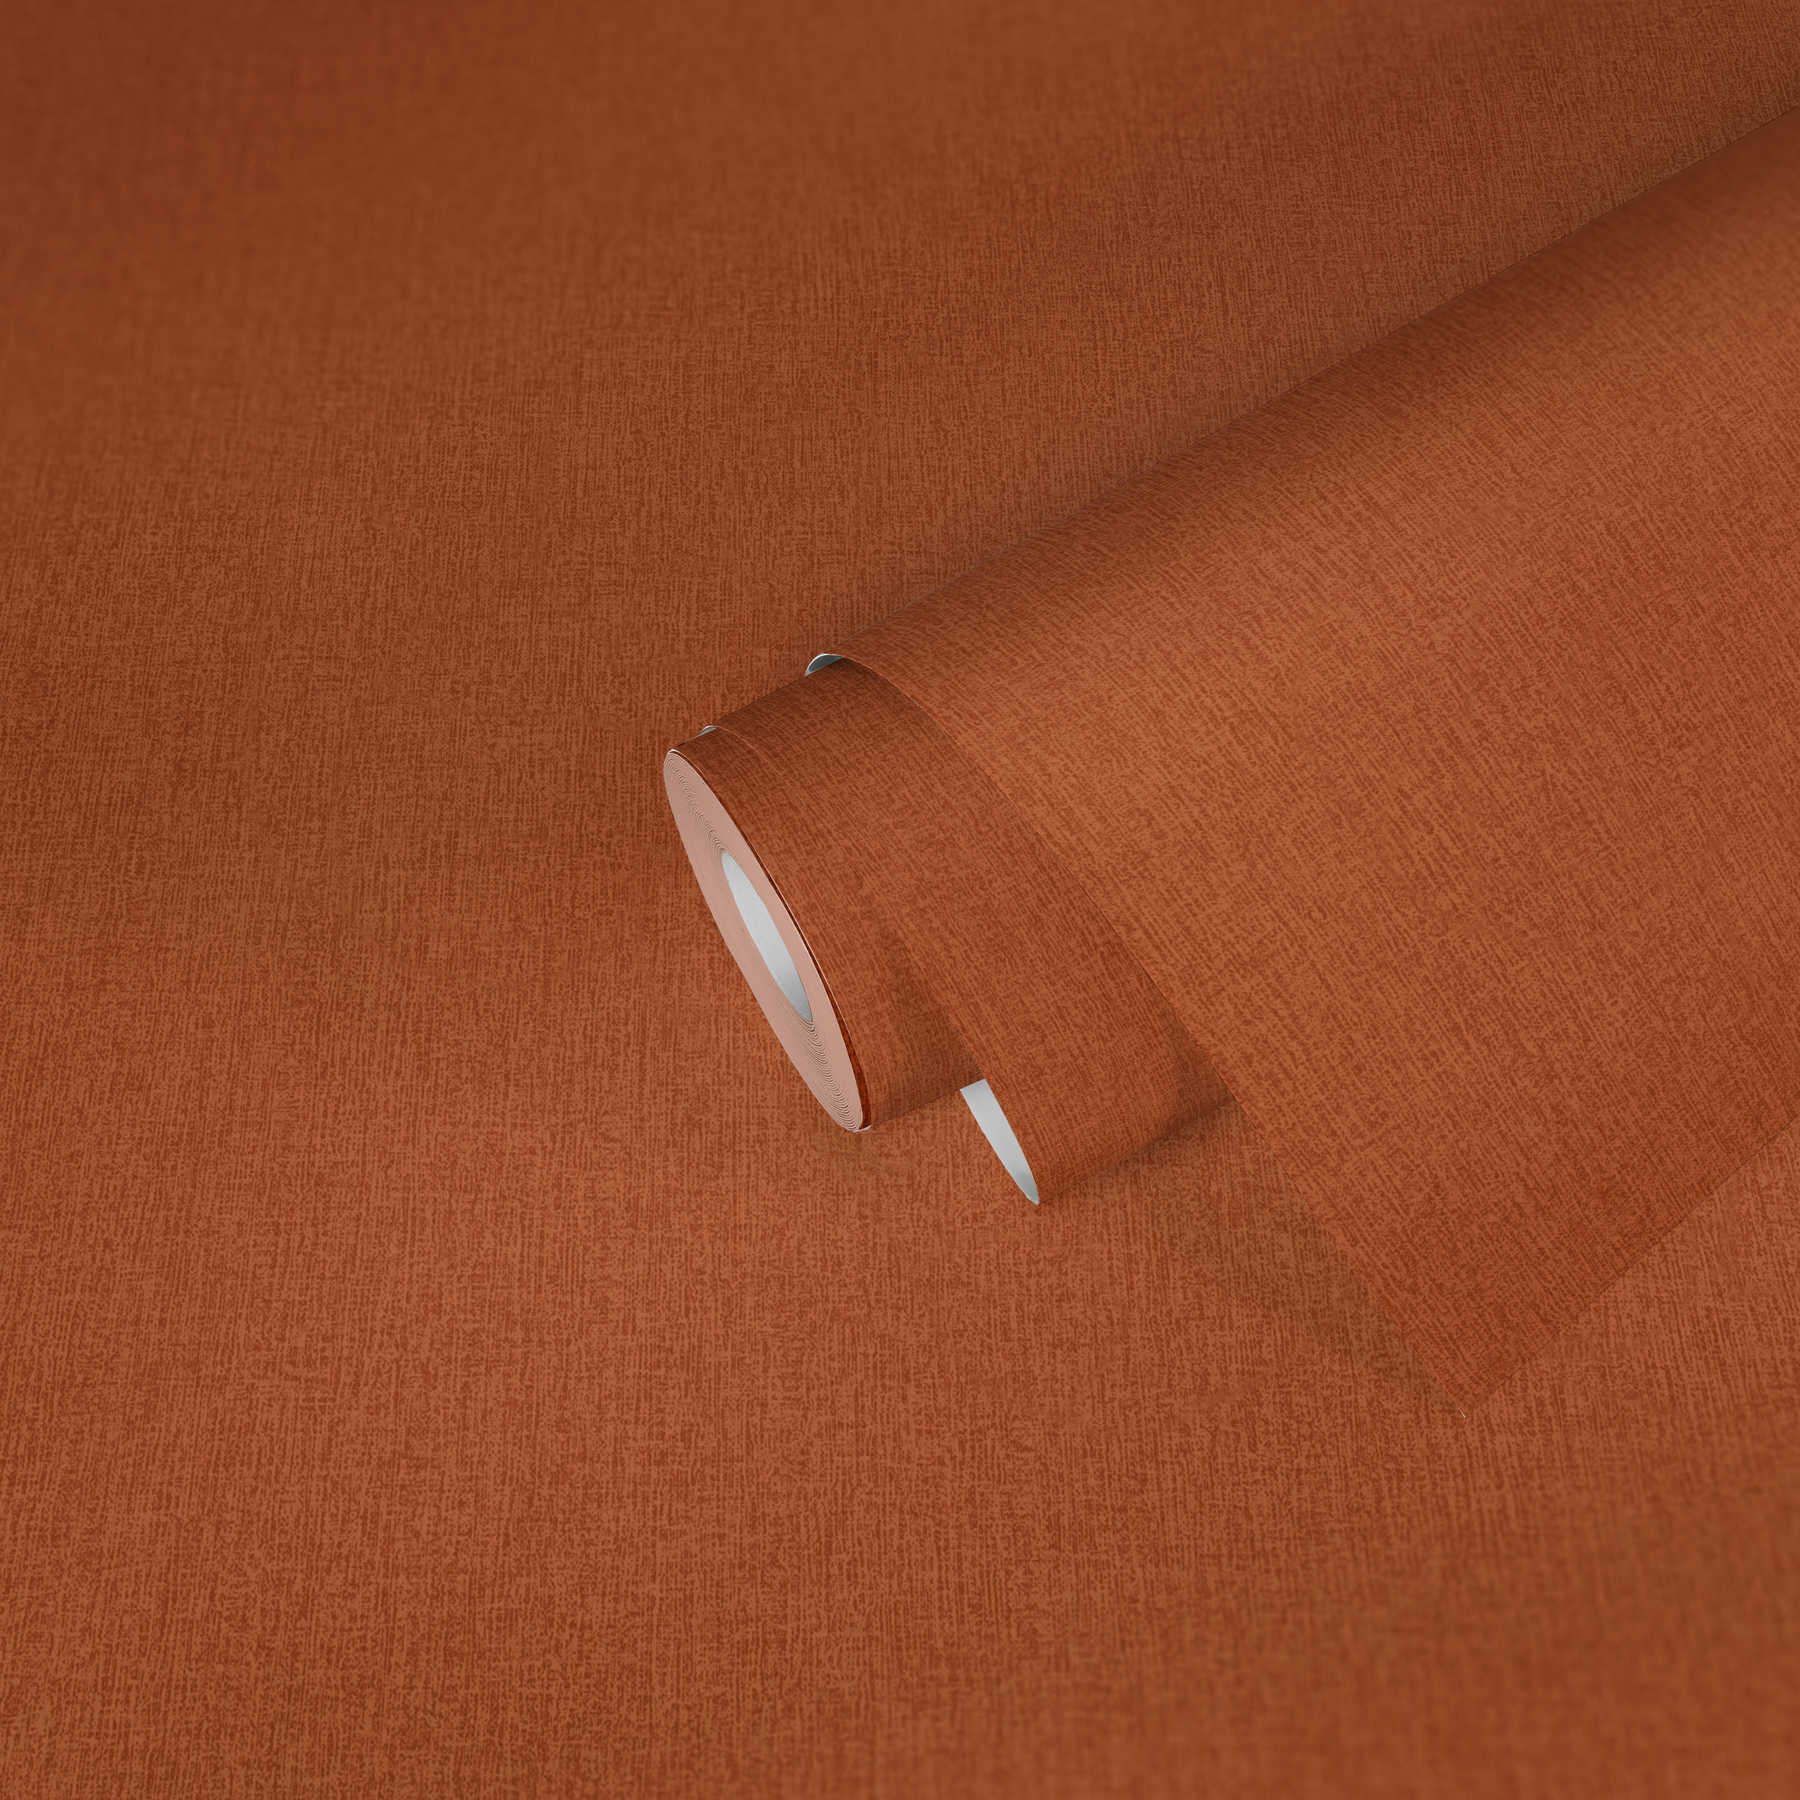             Plain wallpaper mottled with fabric texture - orange
        